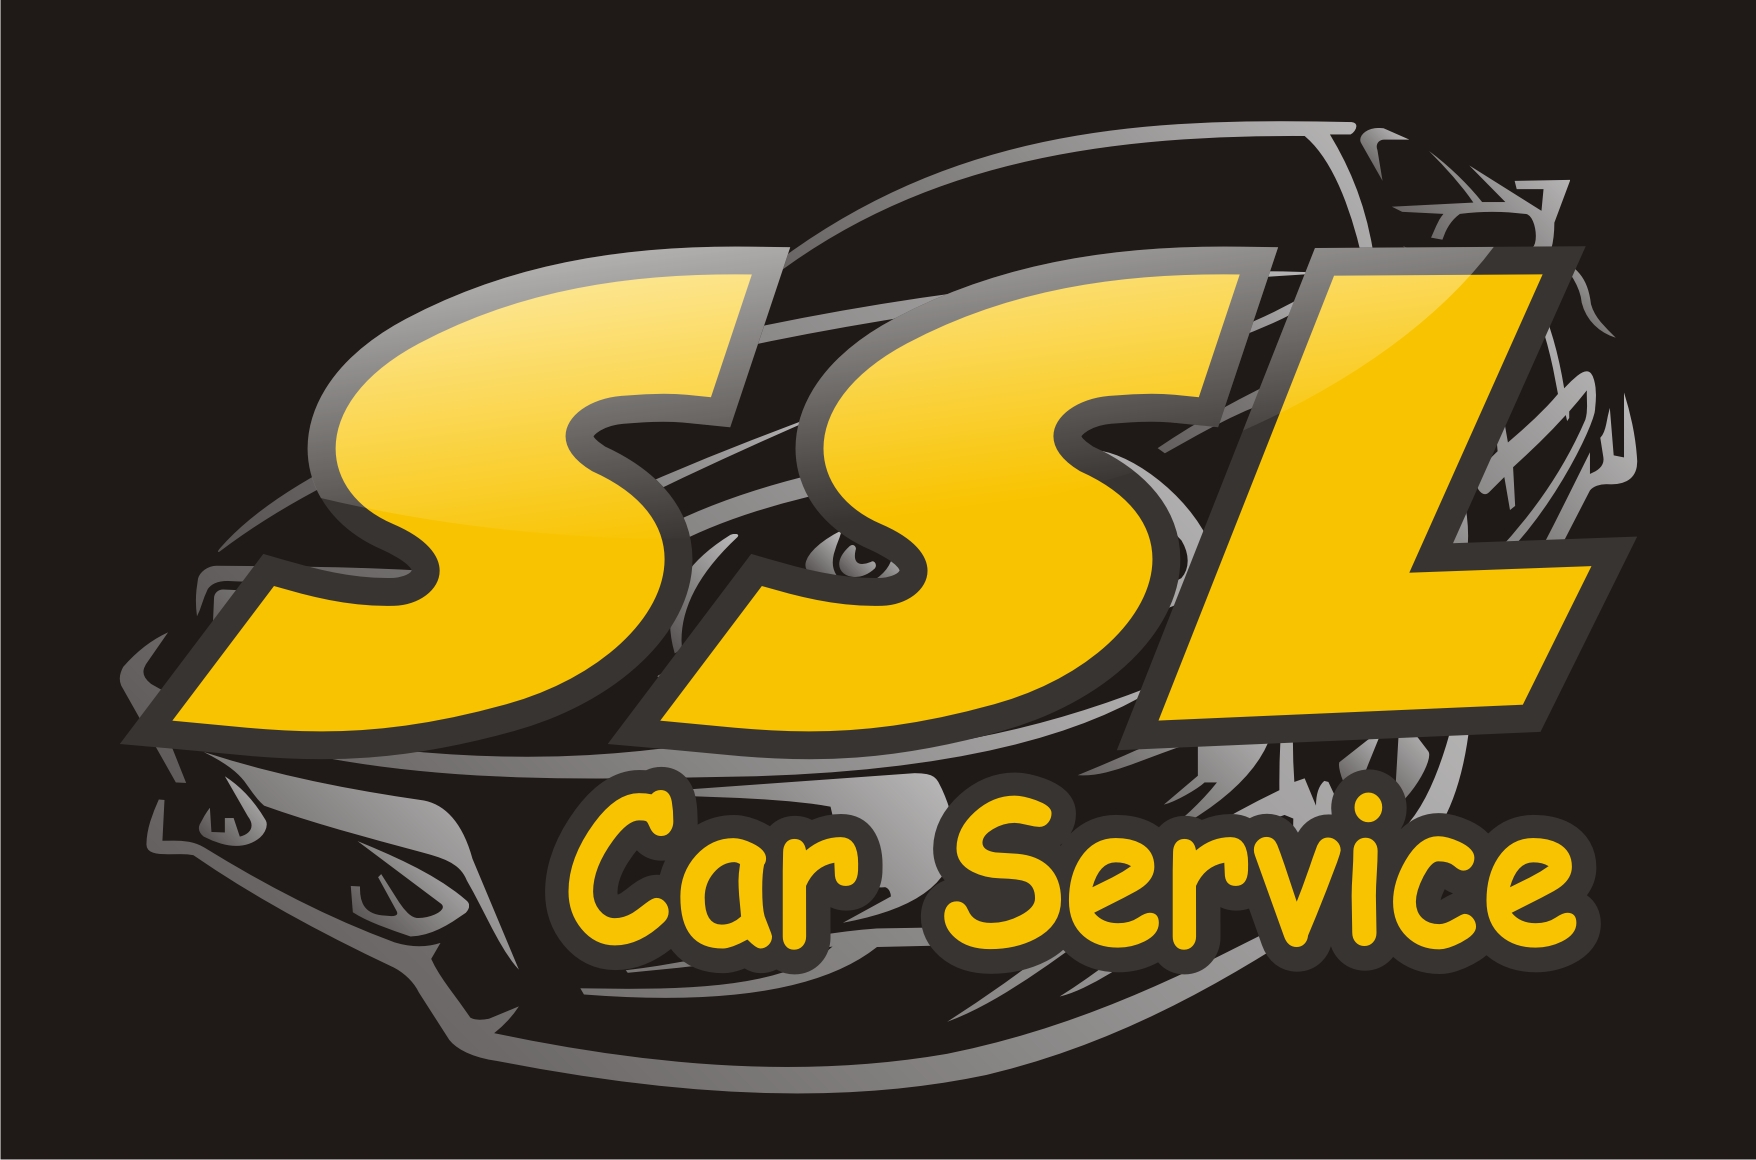 2fast-Tuning / SSL Car-Service - Inh. Yves Schubert logo